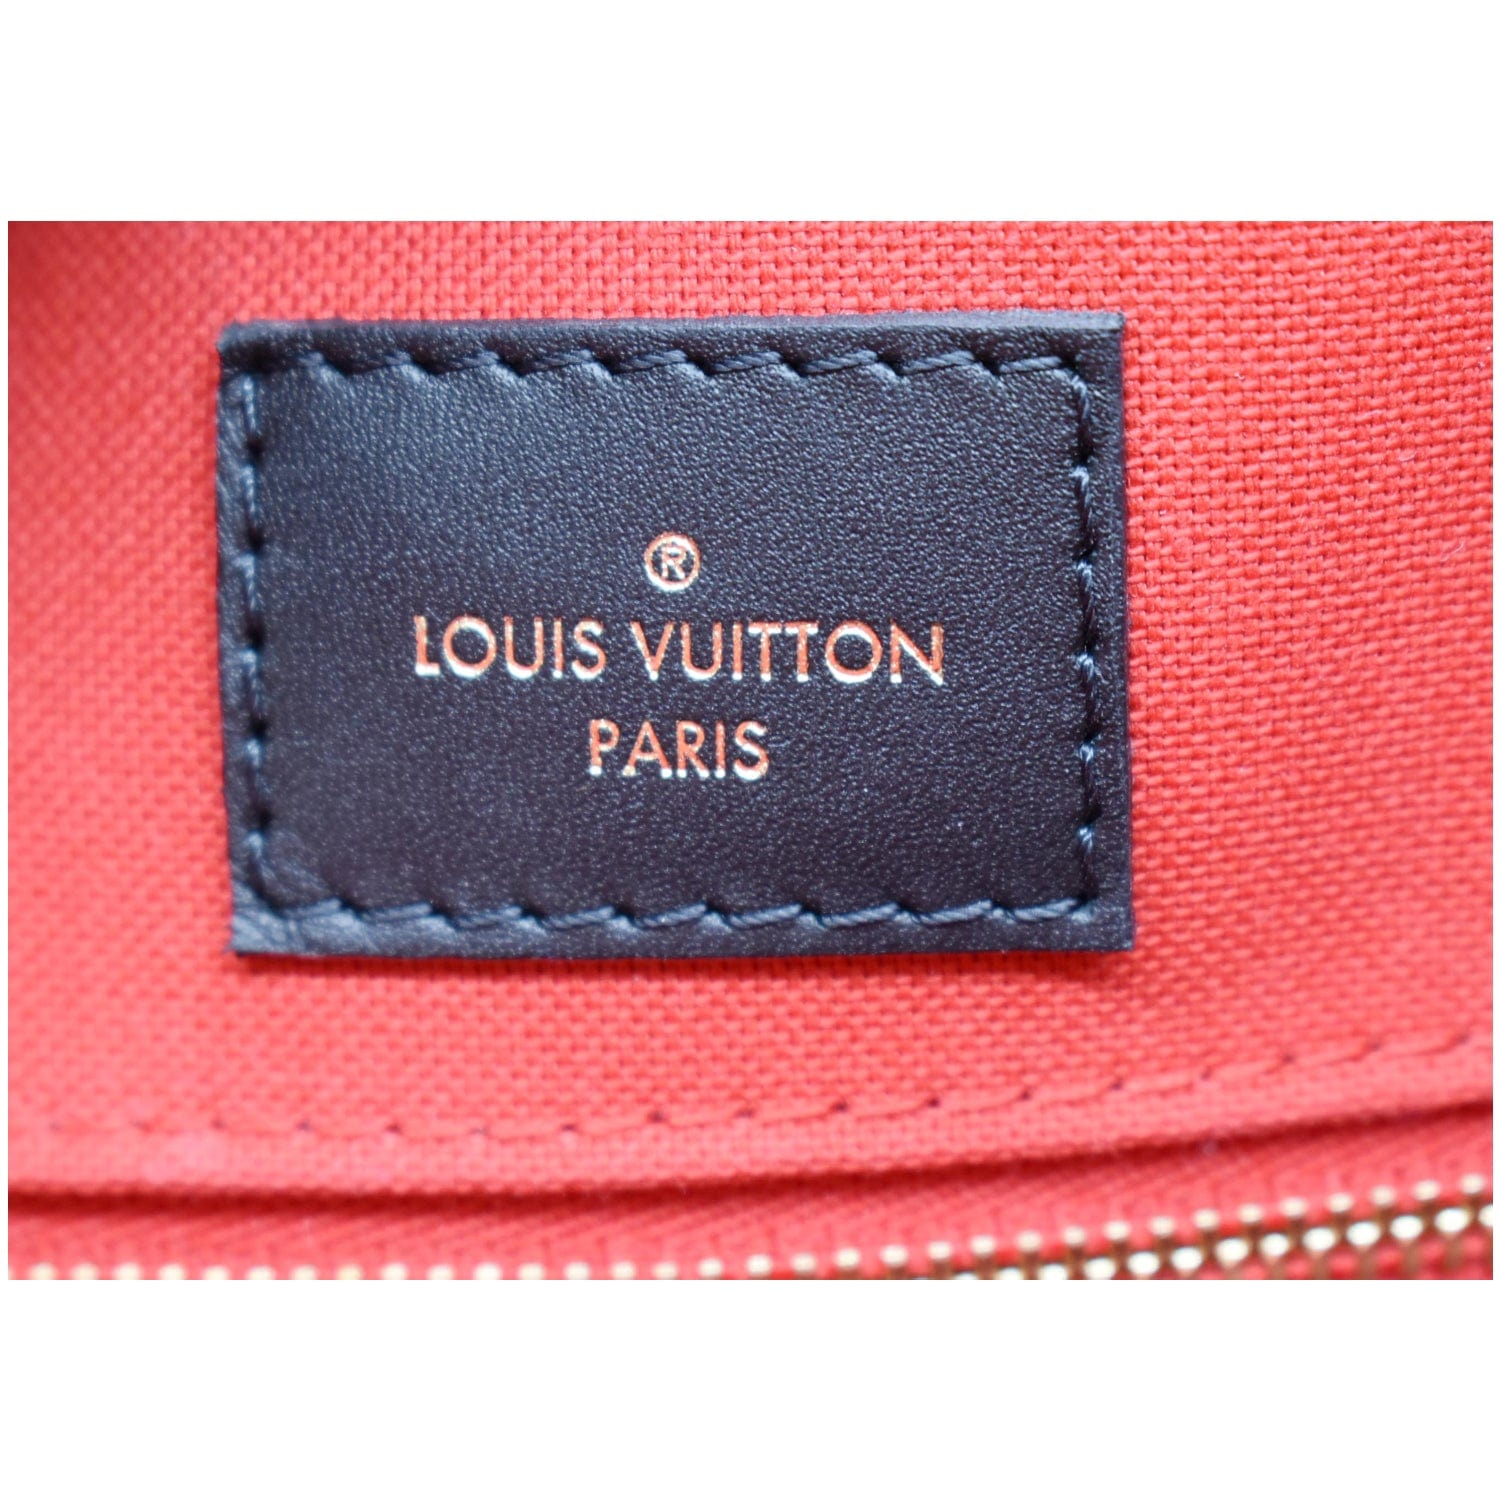 Consigment Store on Instagram: ❌VENDIDA❌ Deal of the Day ❤️ L O U I S V U  I T T O N Victoire Monogram Canvas and Red Leather Shoulder/Crossbody Bag  🤩 Condición 9.5/10 Incluye Dustbag Original 📧